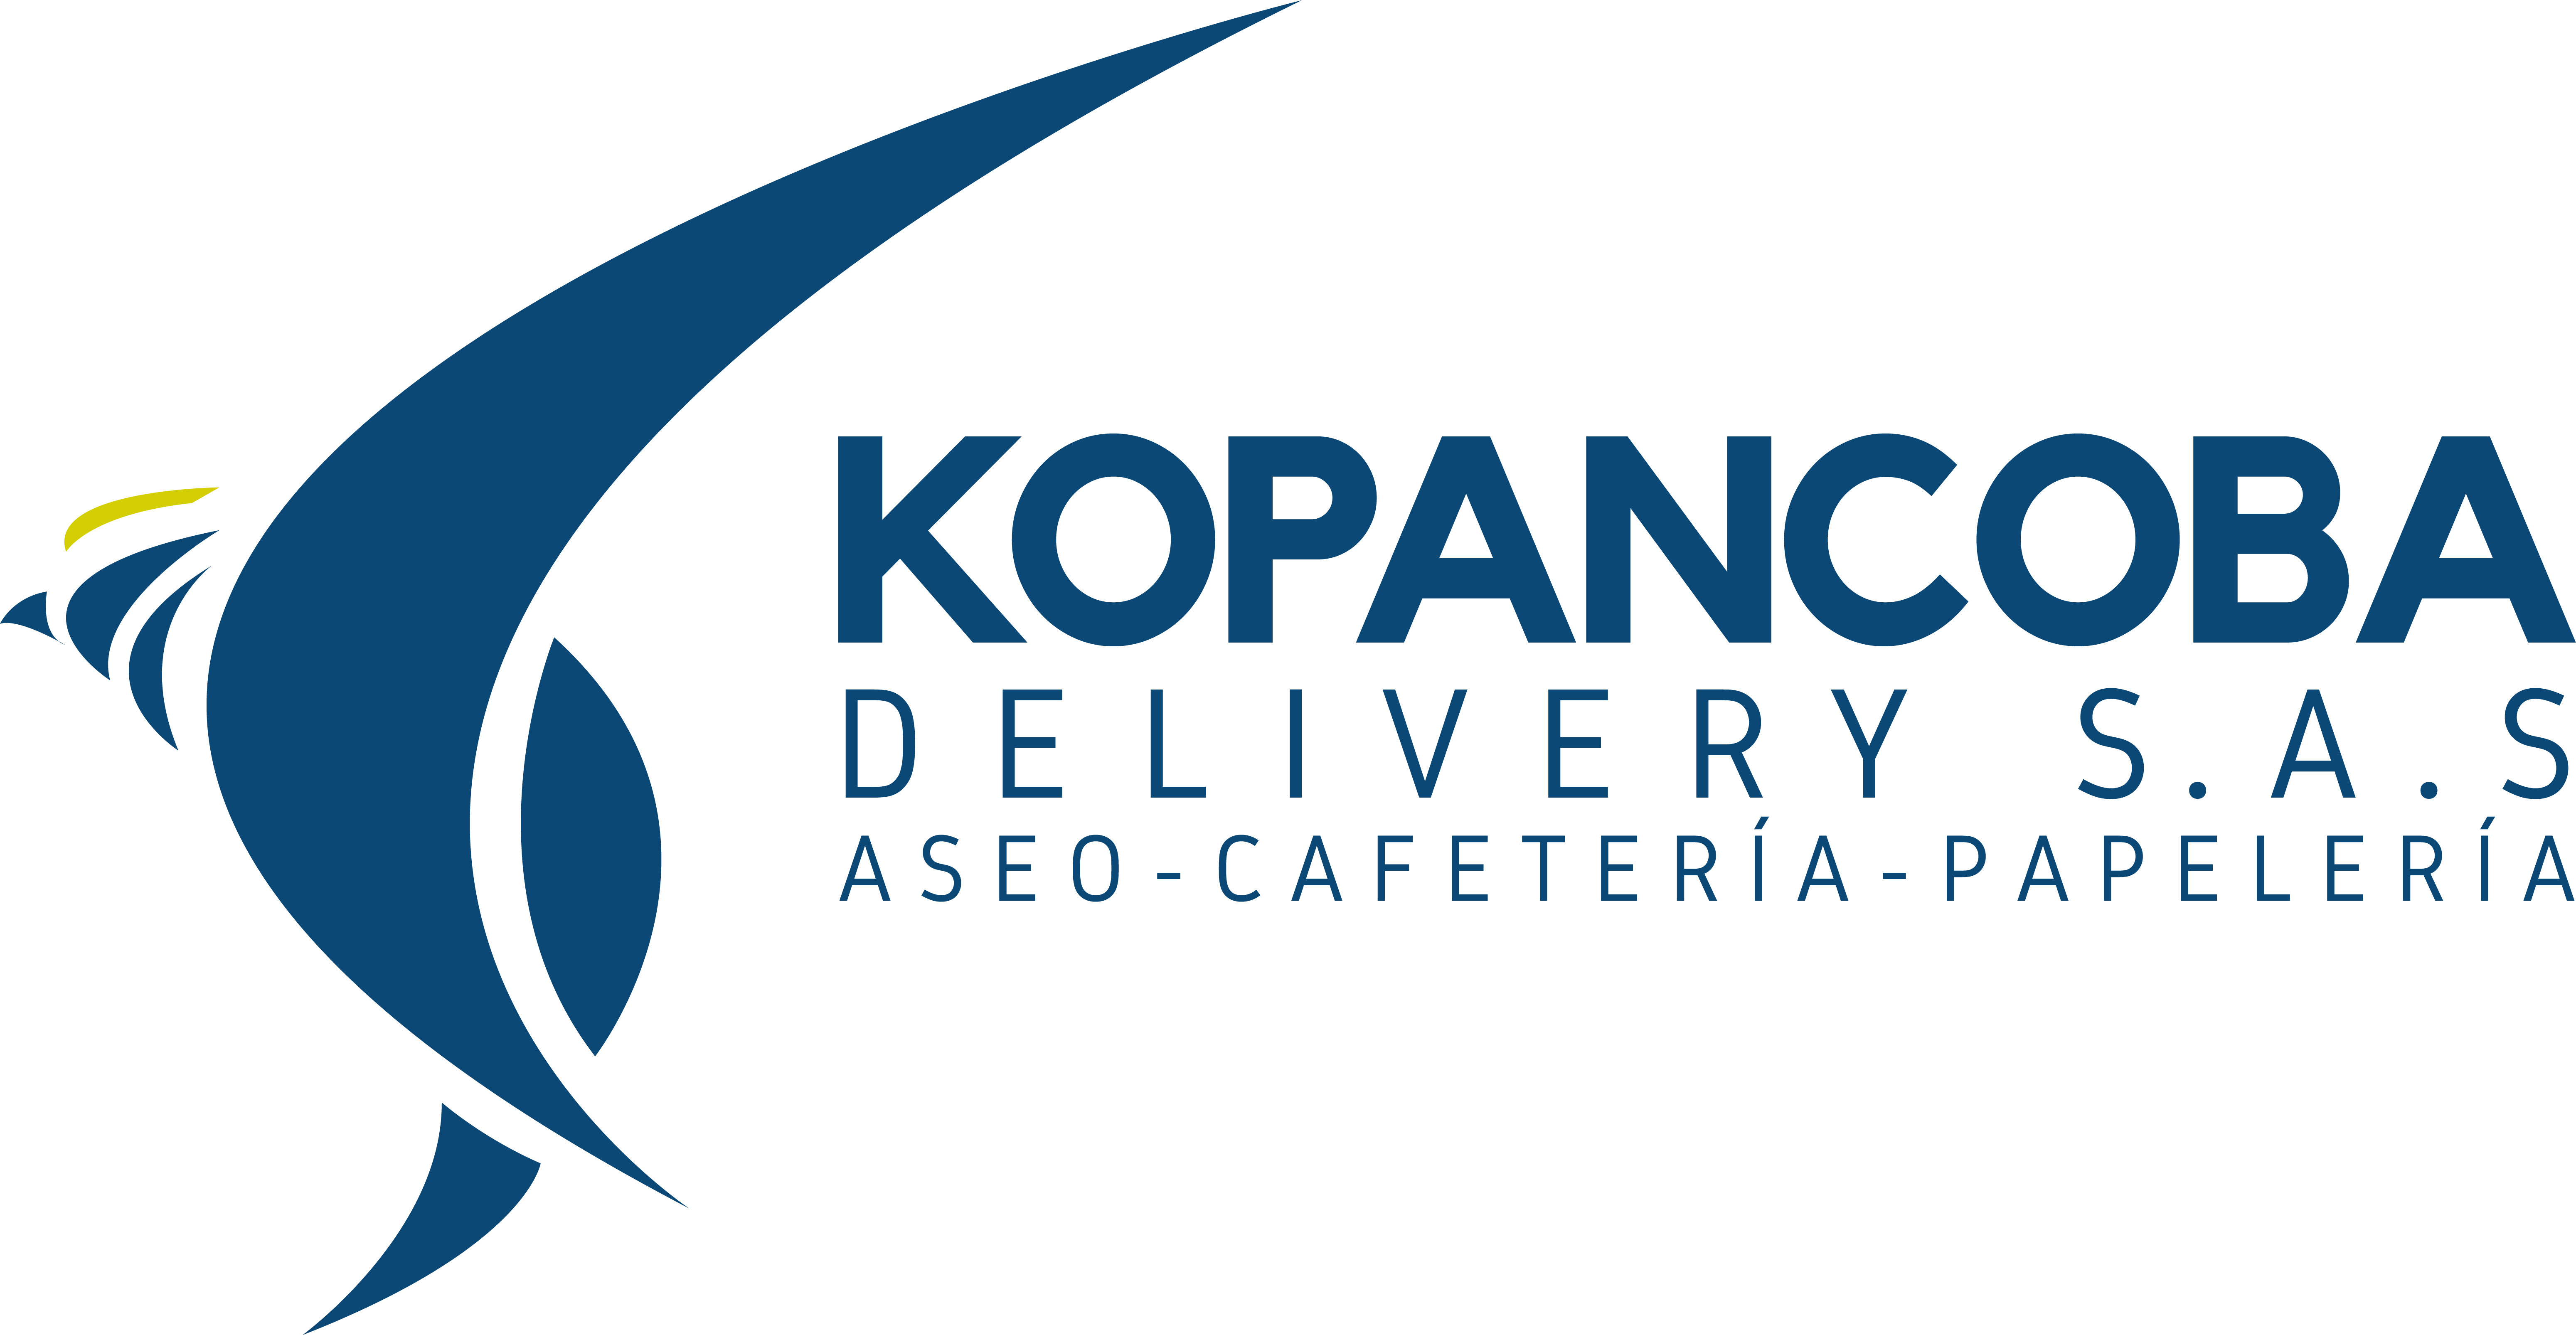 KopanCoba Delivery S.A.S